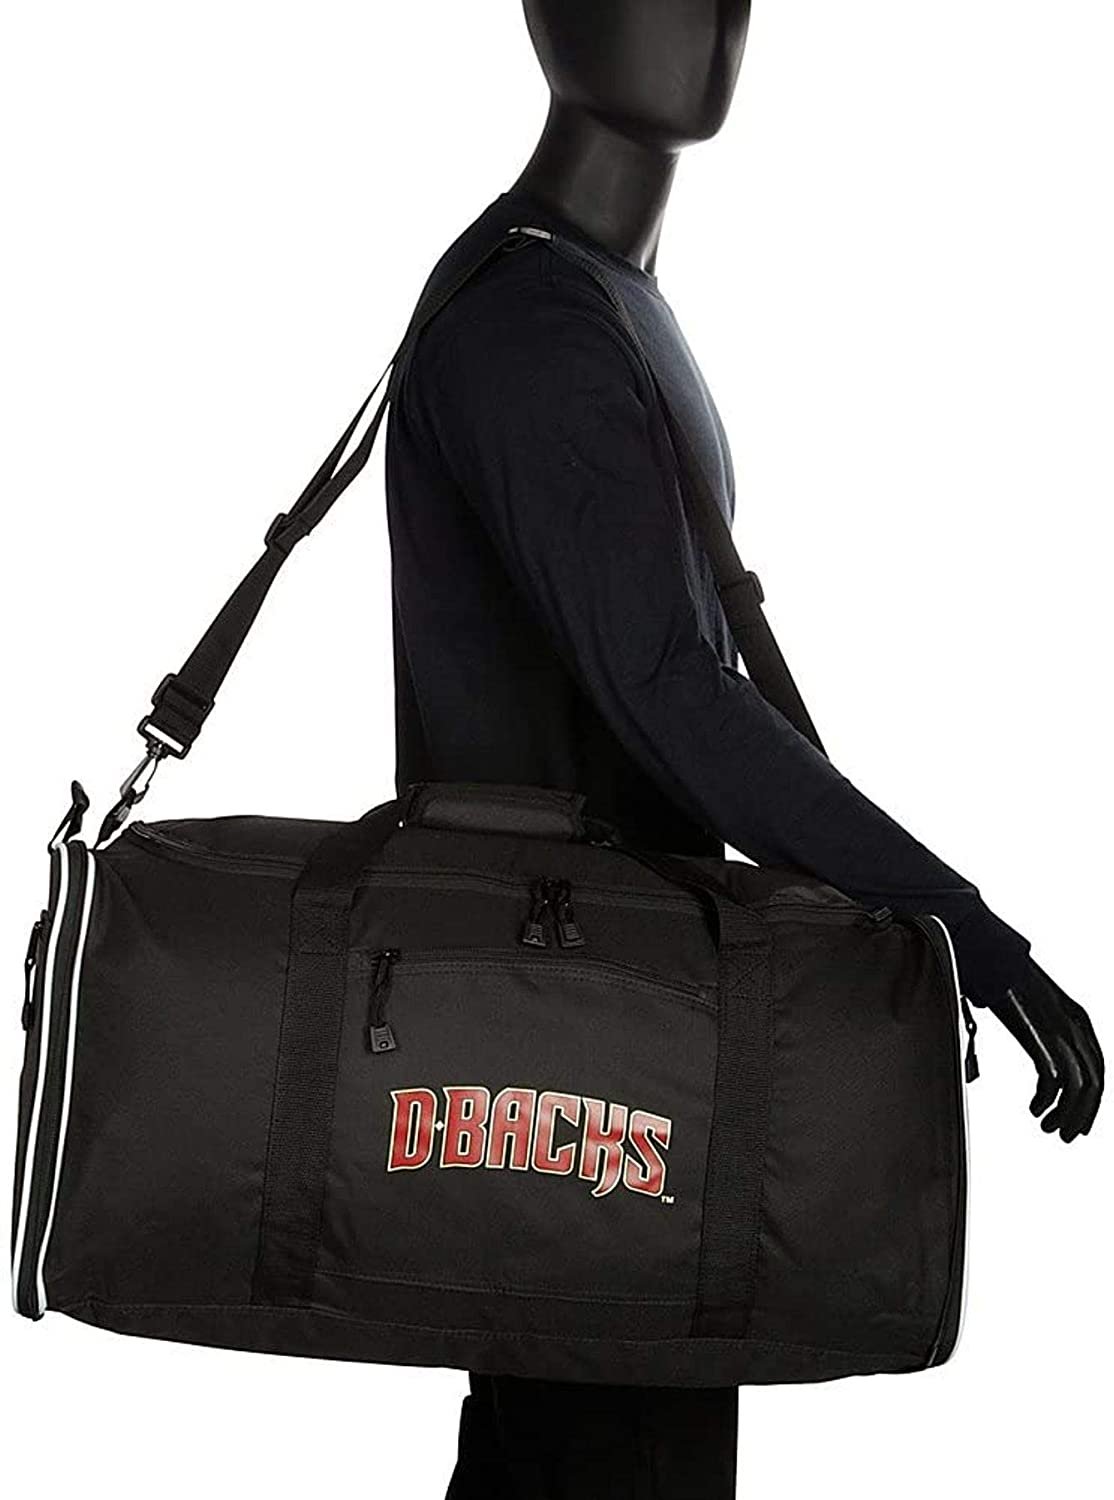 Washington Nationals Premium Duffel Bag Steal Design 28x11x12 Inch, Fold Up Zipper Design